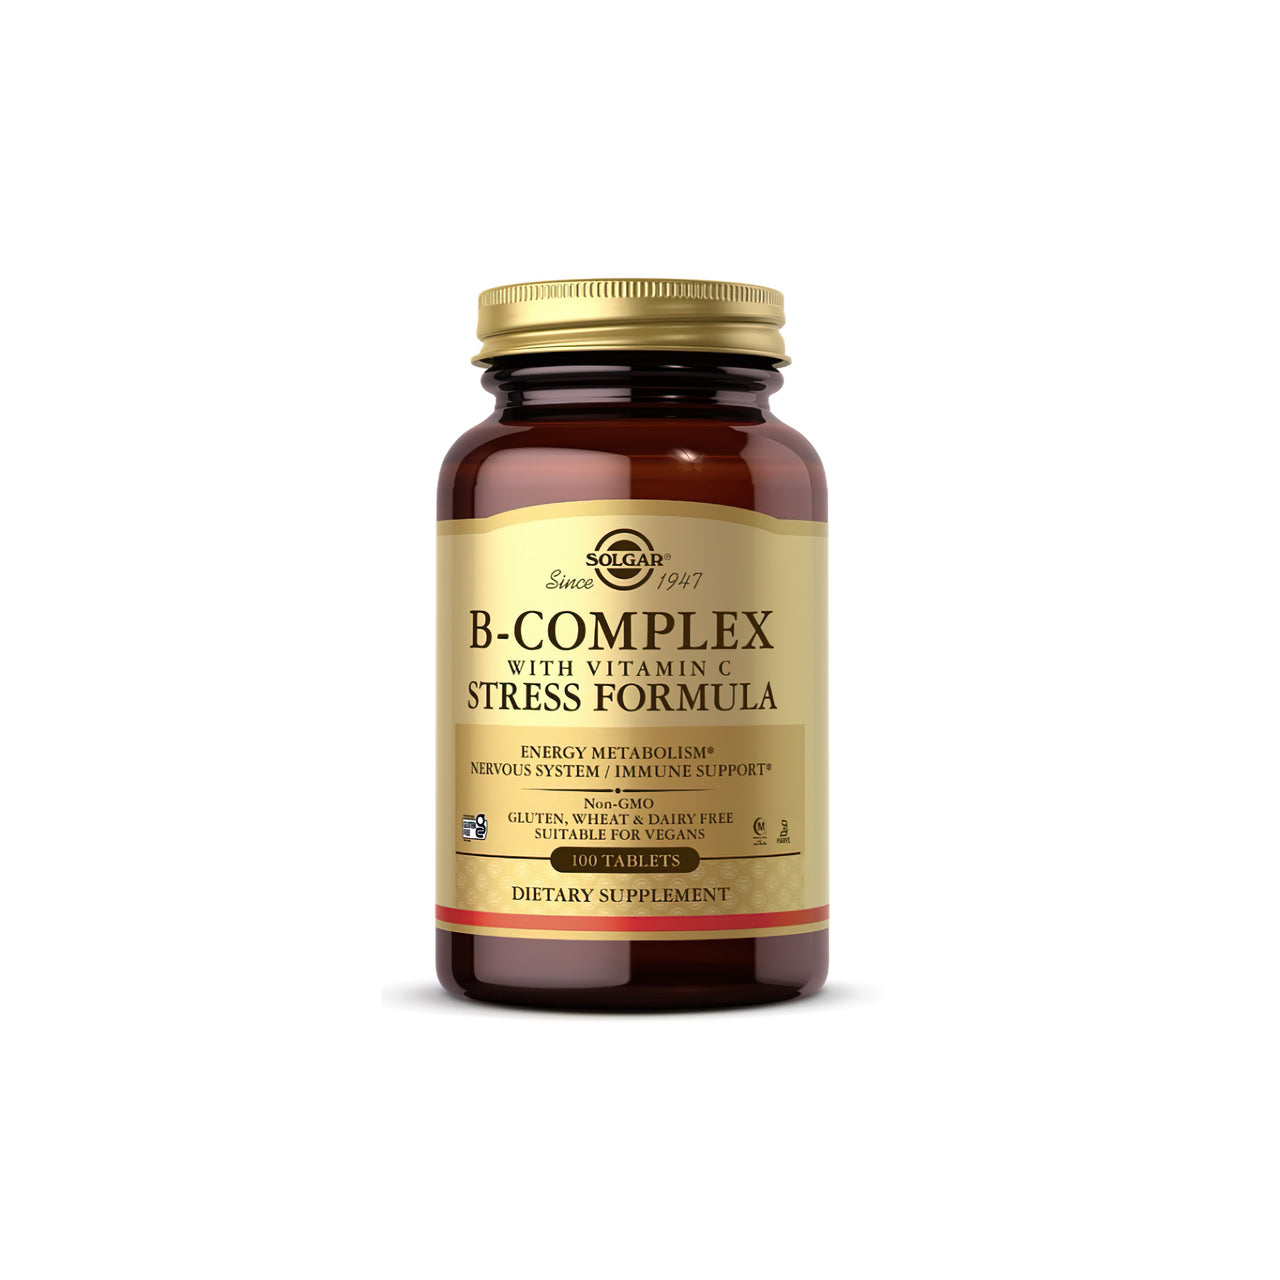 Un suplemento dietético - Solgar B-Complex with Vitamin C 100 Tablets.